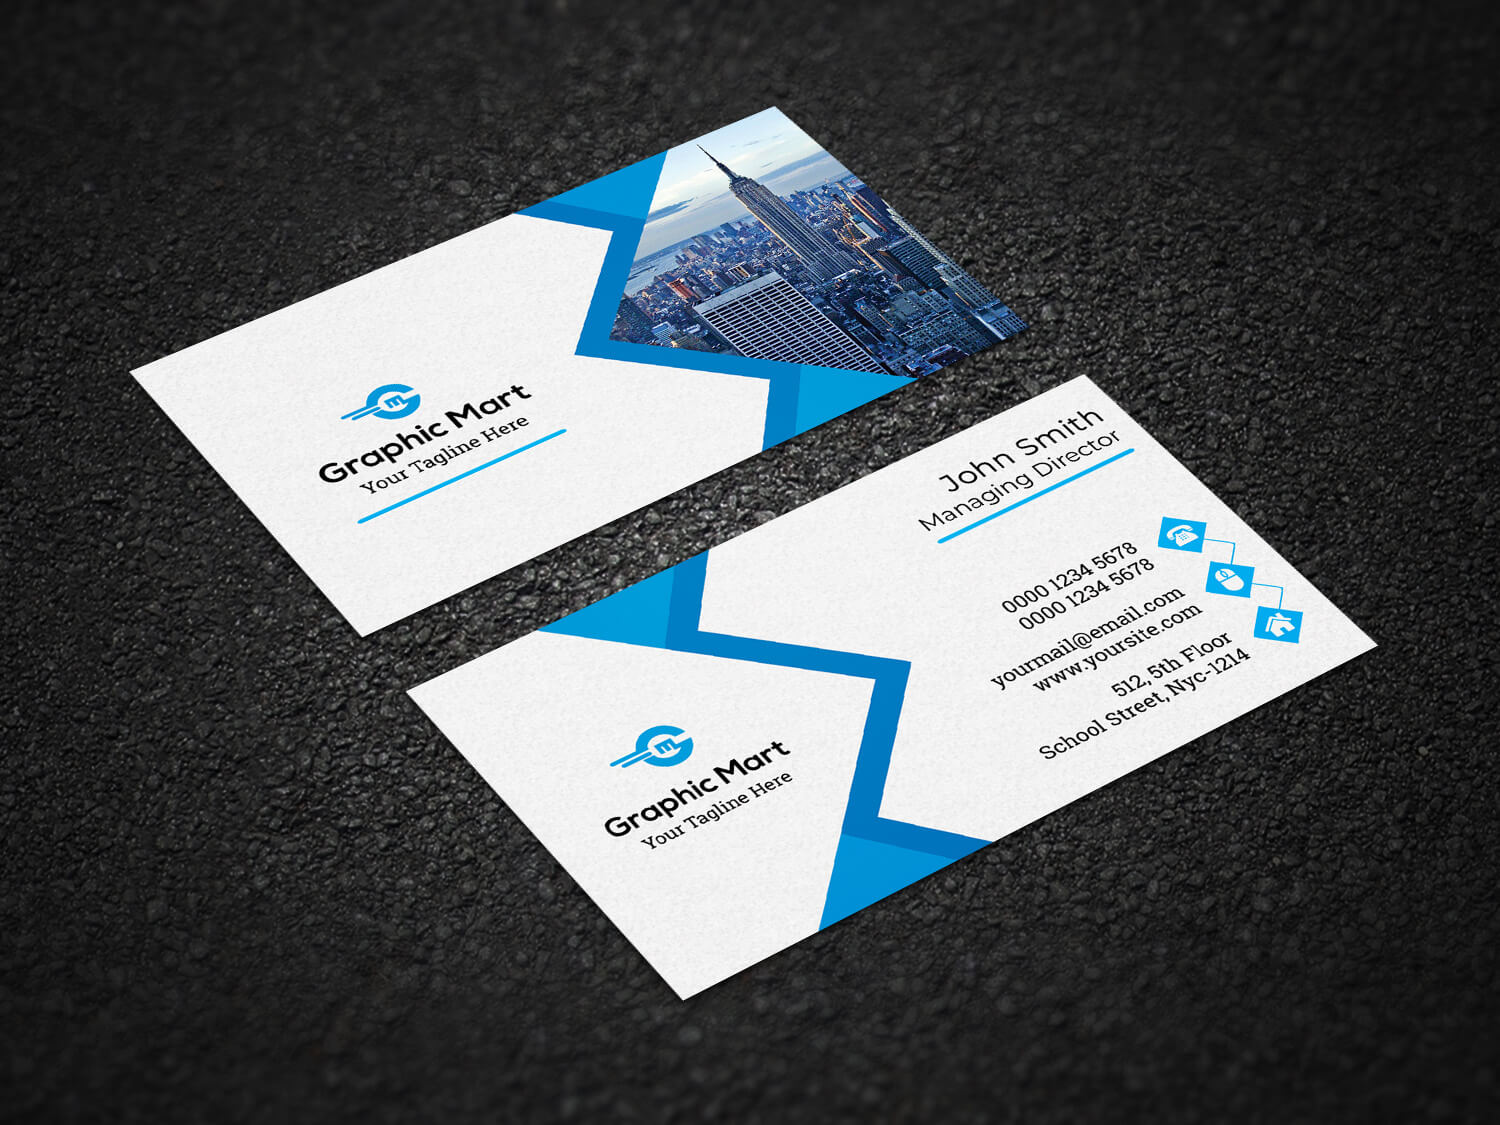 Minimalist Business Cardprottoy Khandokar On Dribbble Within Photoshop Cs6 Business Card Template